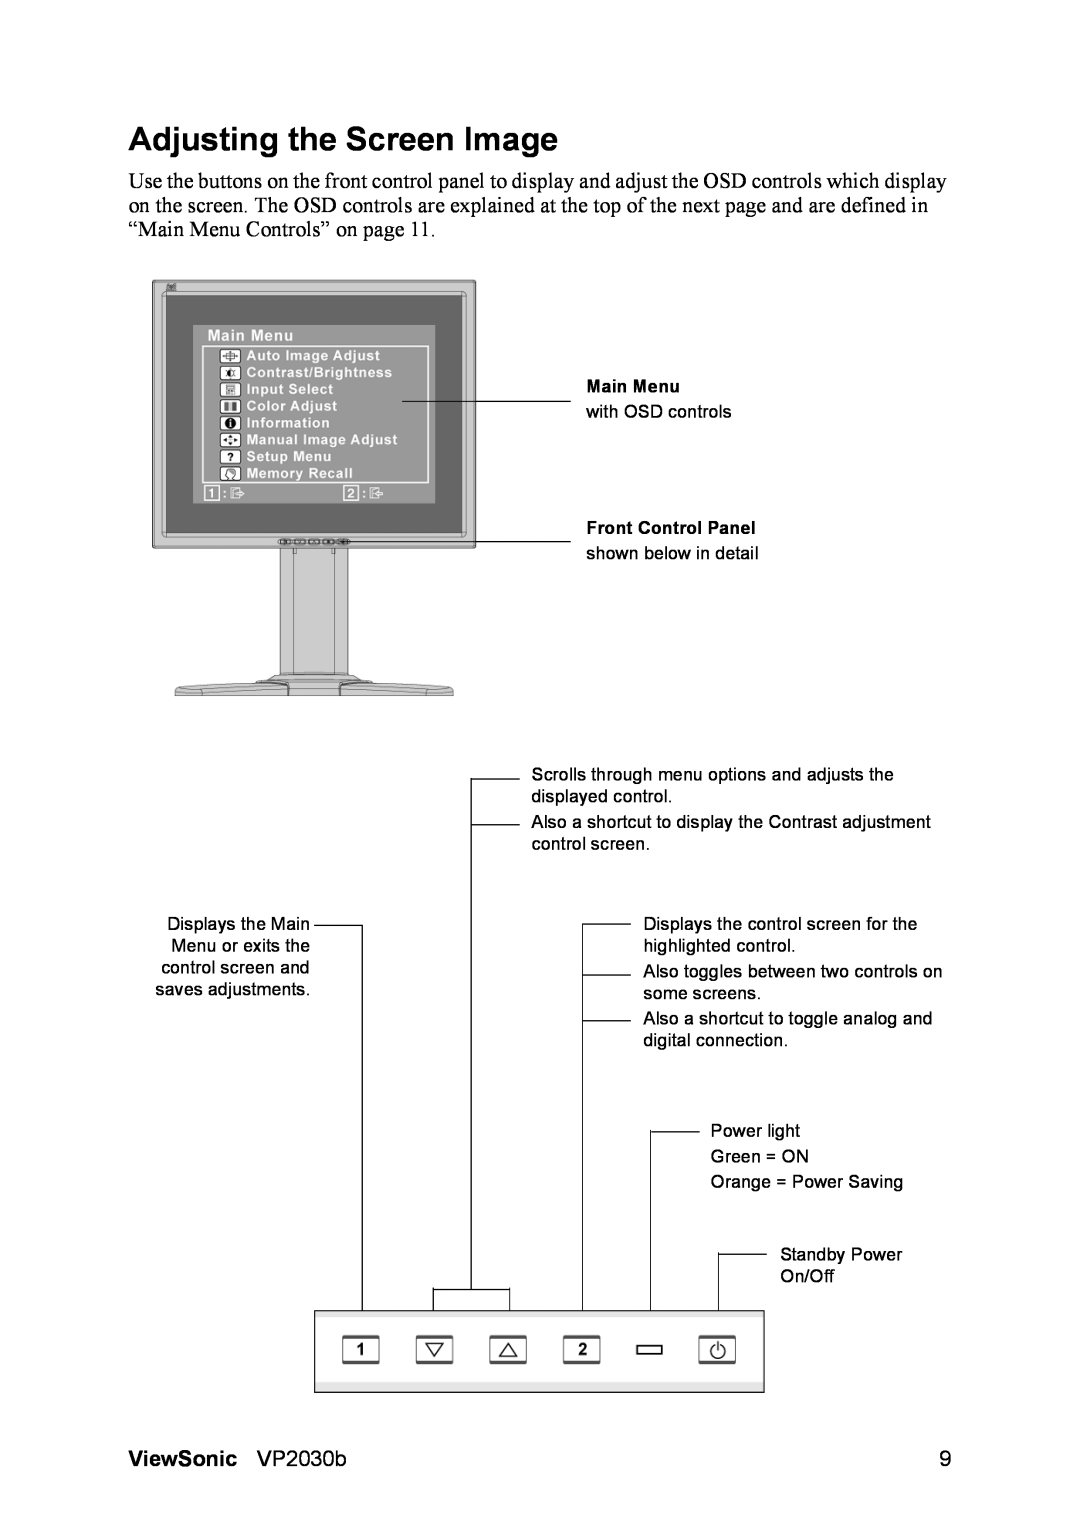 ViewSonic VP2030B manual Adjusting the Screen Image, ViewSonic VP2030b, Main Menu, Front Control Panel 